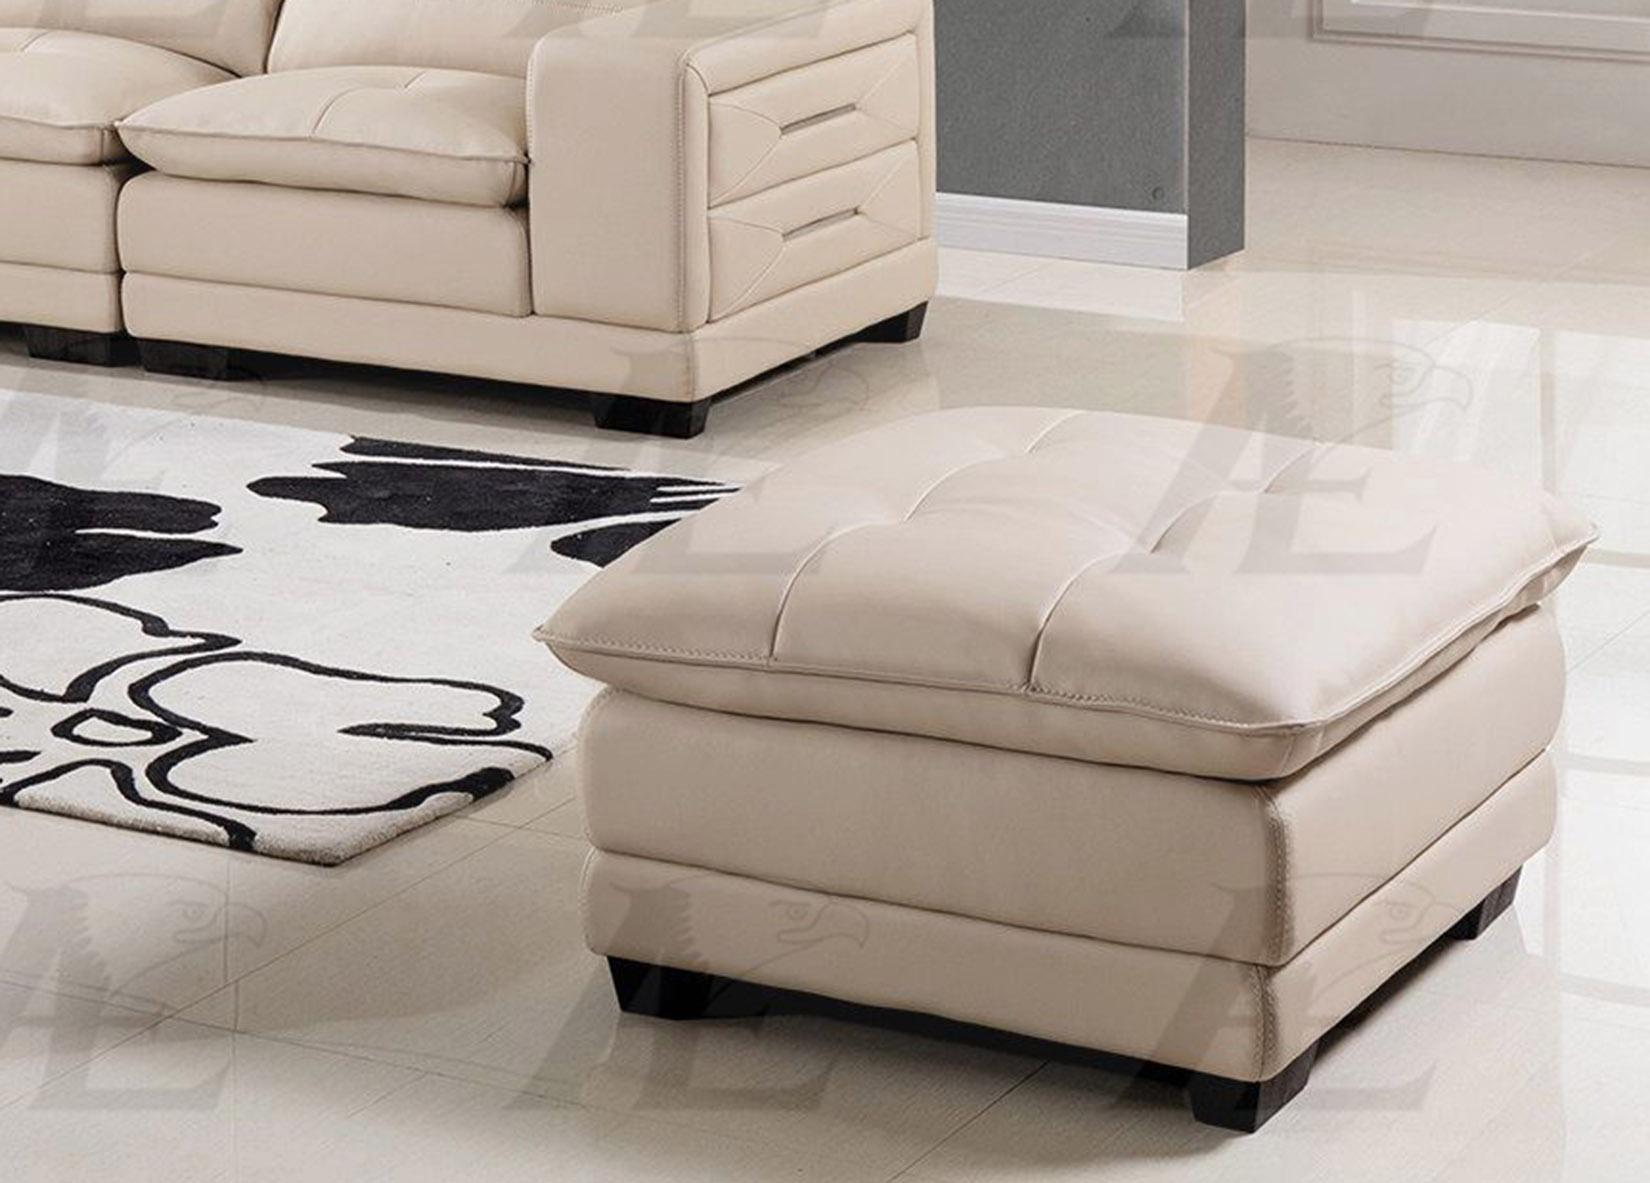 

    
American Eagle Furniture AE-L688M-LG Sectional Sofa Set Light Gray AE-L688M-LG
